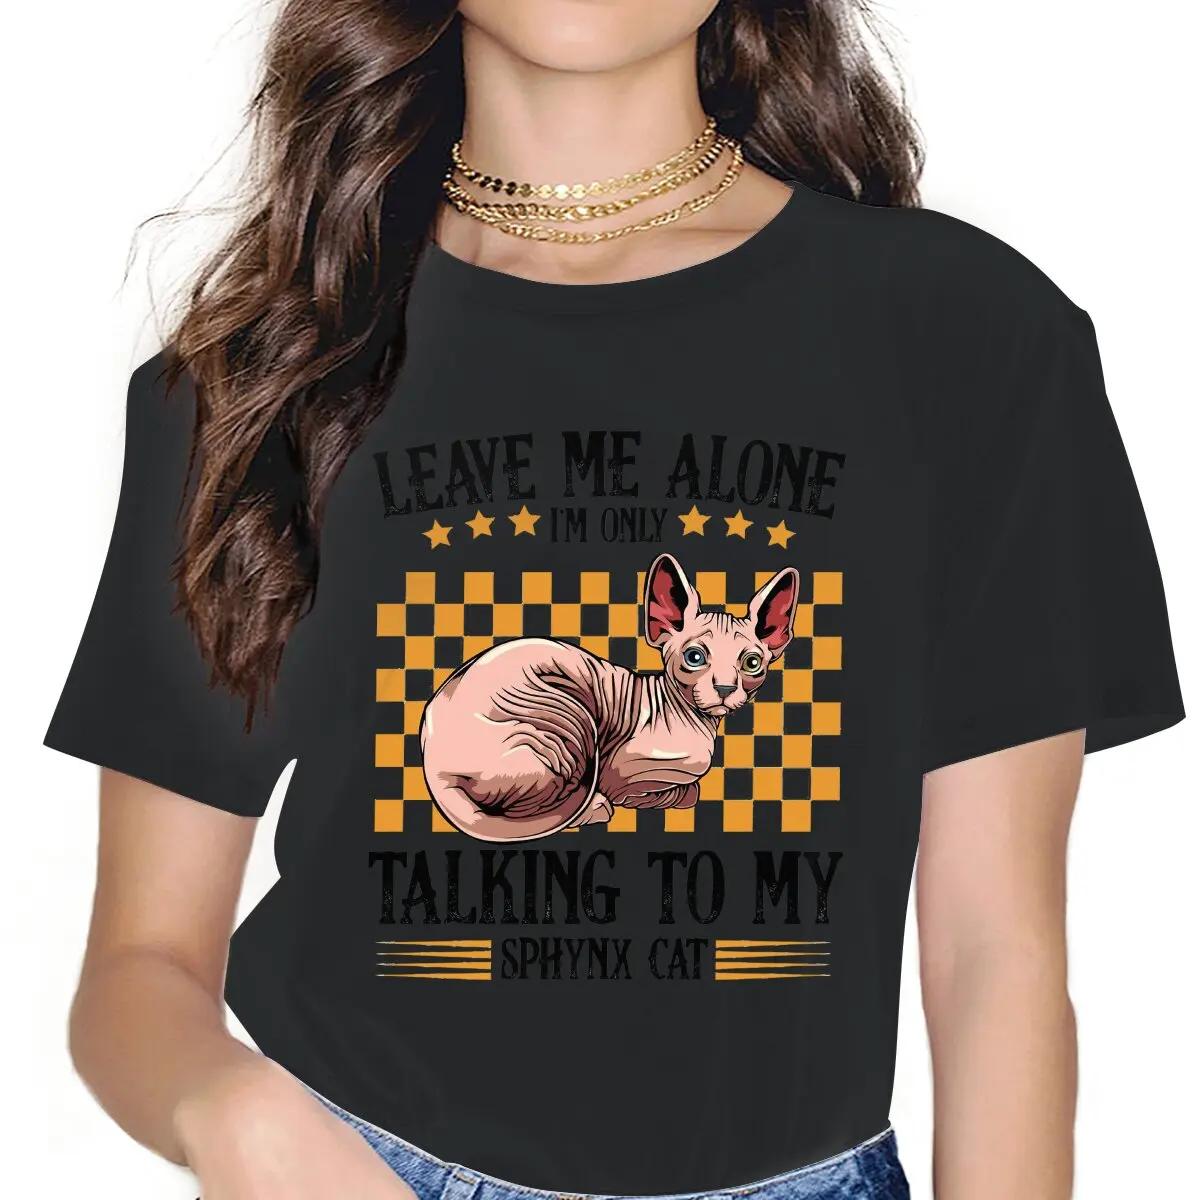 

Leave Me Alone Women Clothing Canadian Sphynx Cat Graphic Female Tshirts Vintage Grunge Loose Tops Tee Kawaii Girls Streetwear